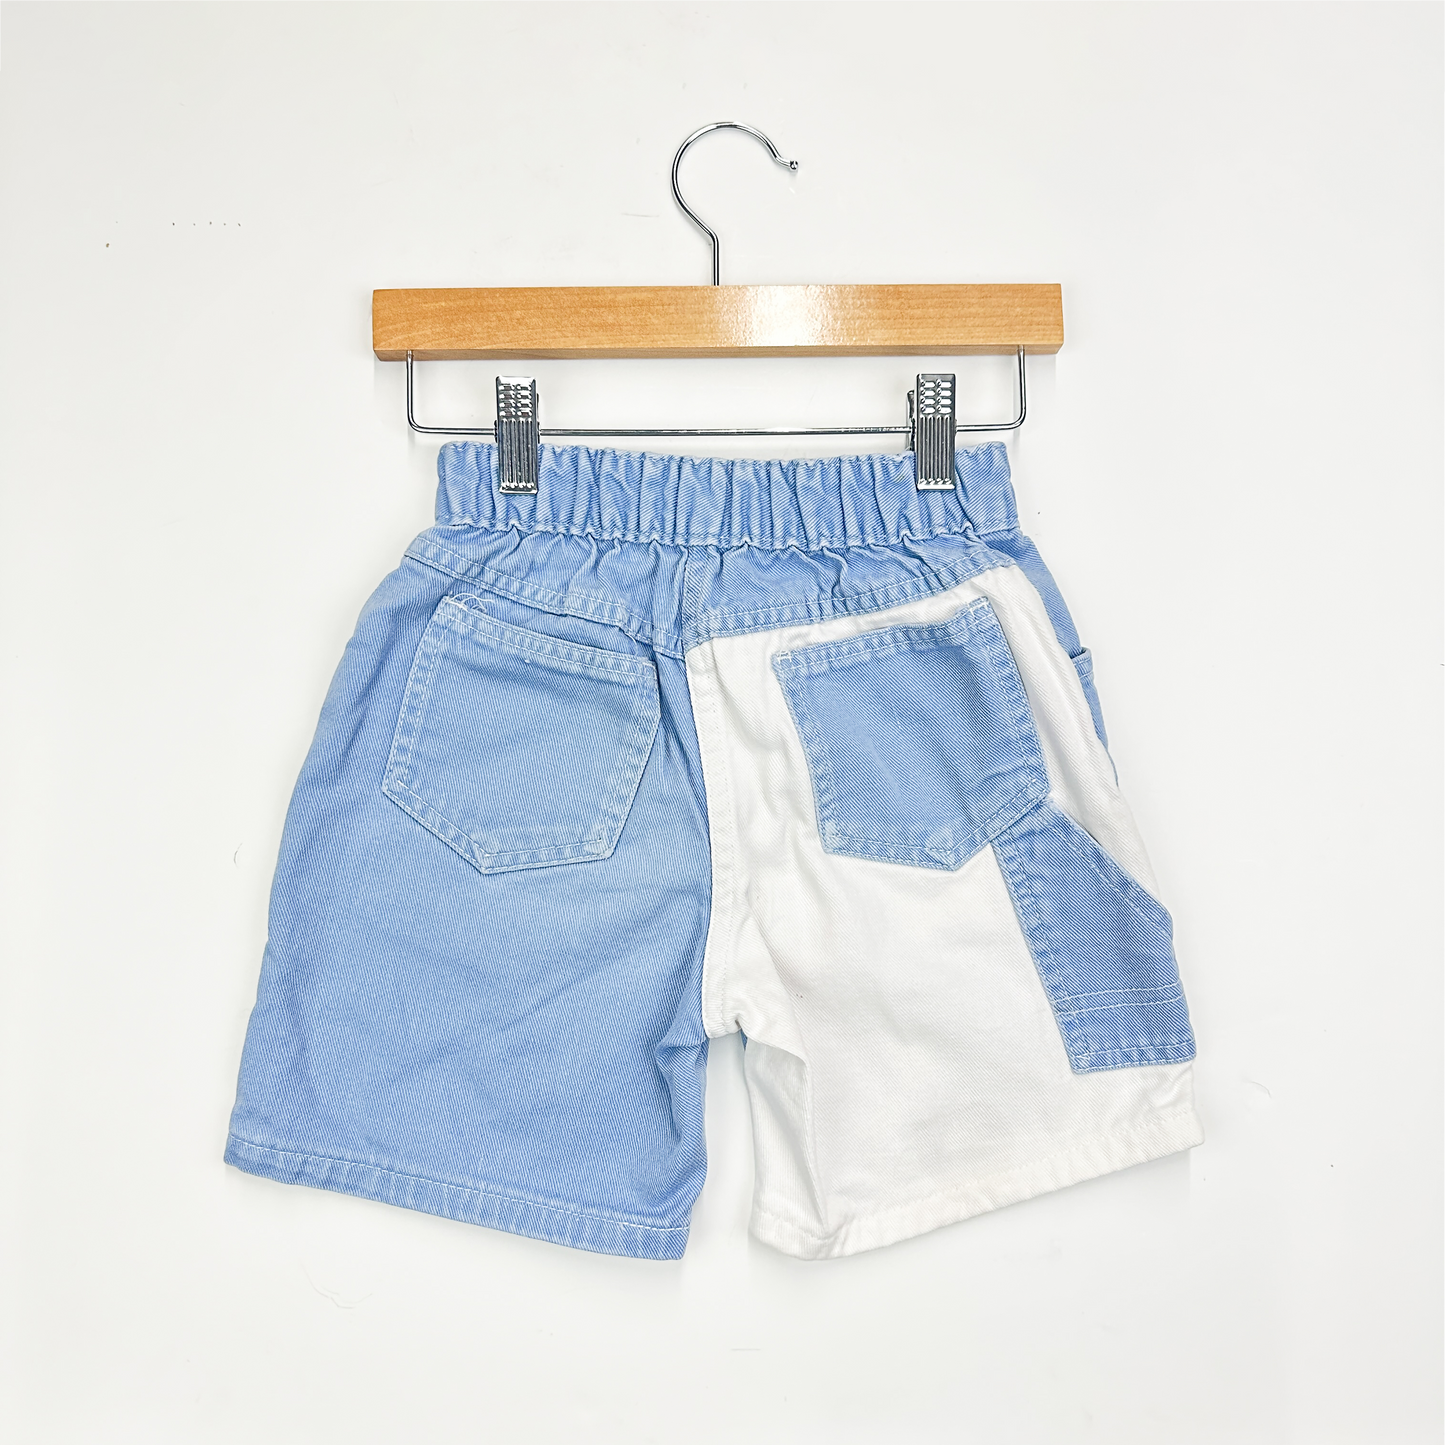 Vintage Kids Light Blue and White Denim Carpenter Shorts - 8yr